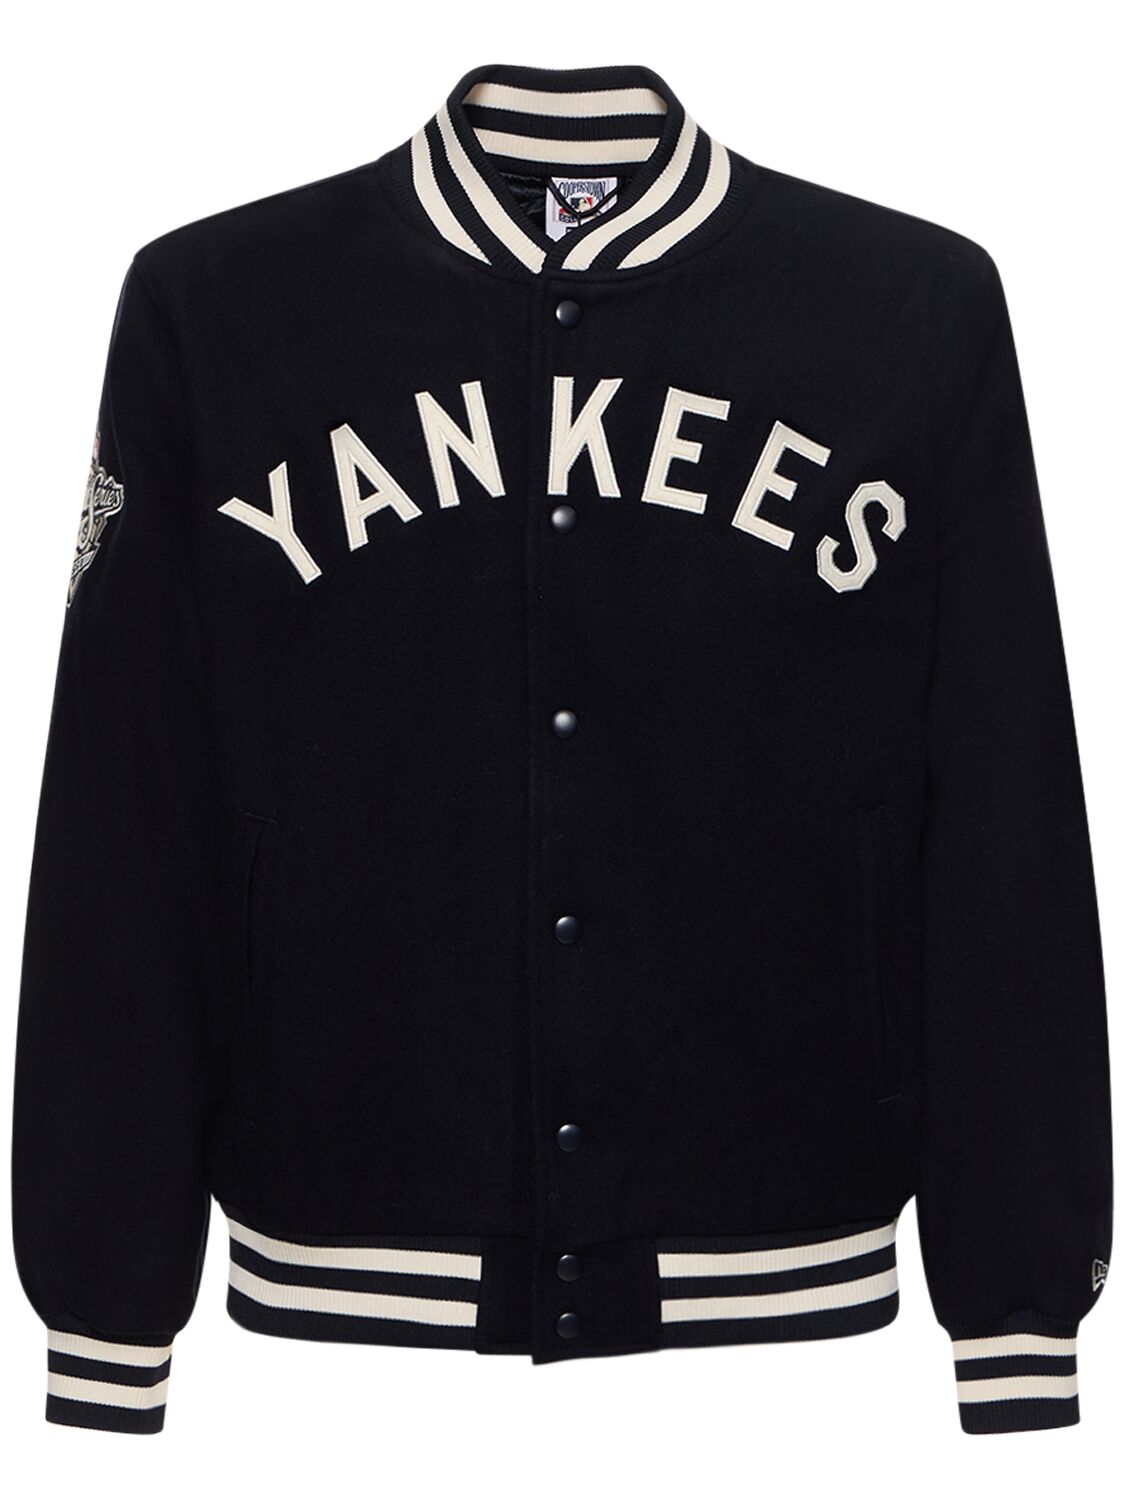 Image of Ny Yankees Mlb Patch Varsity Jacket